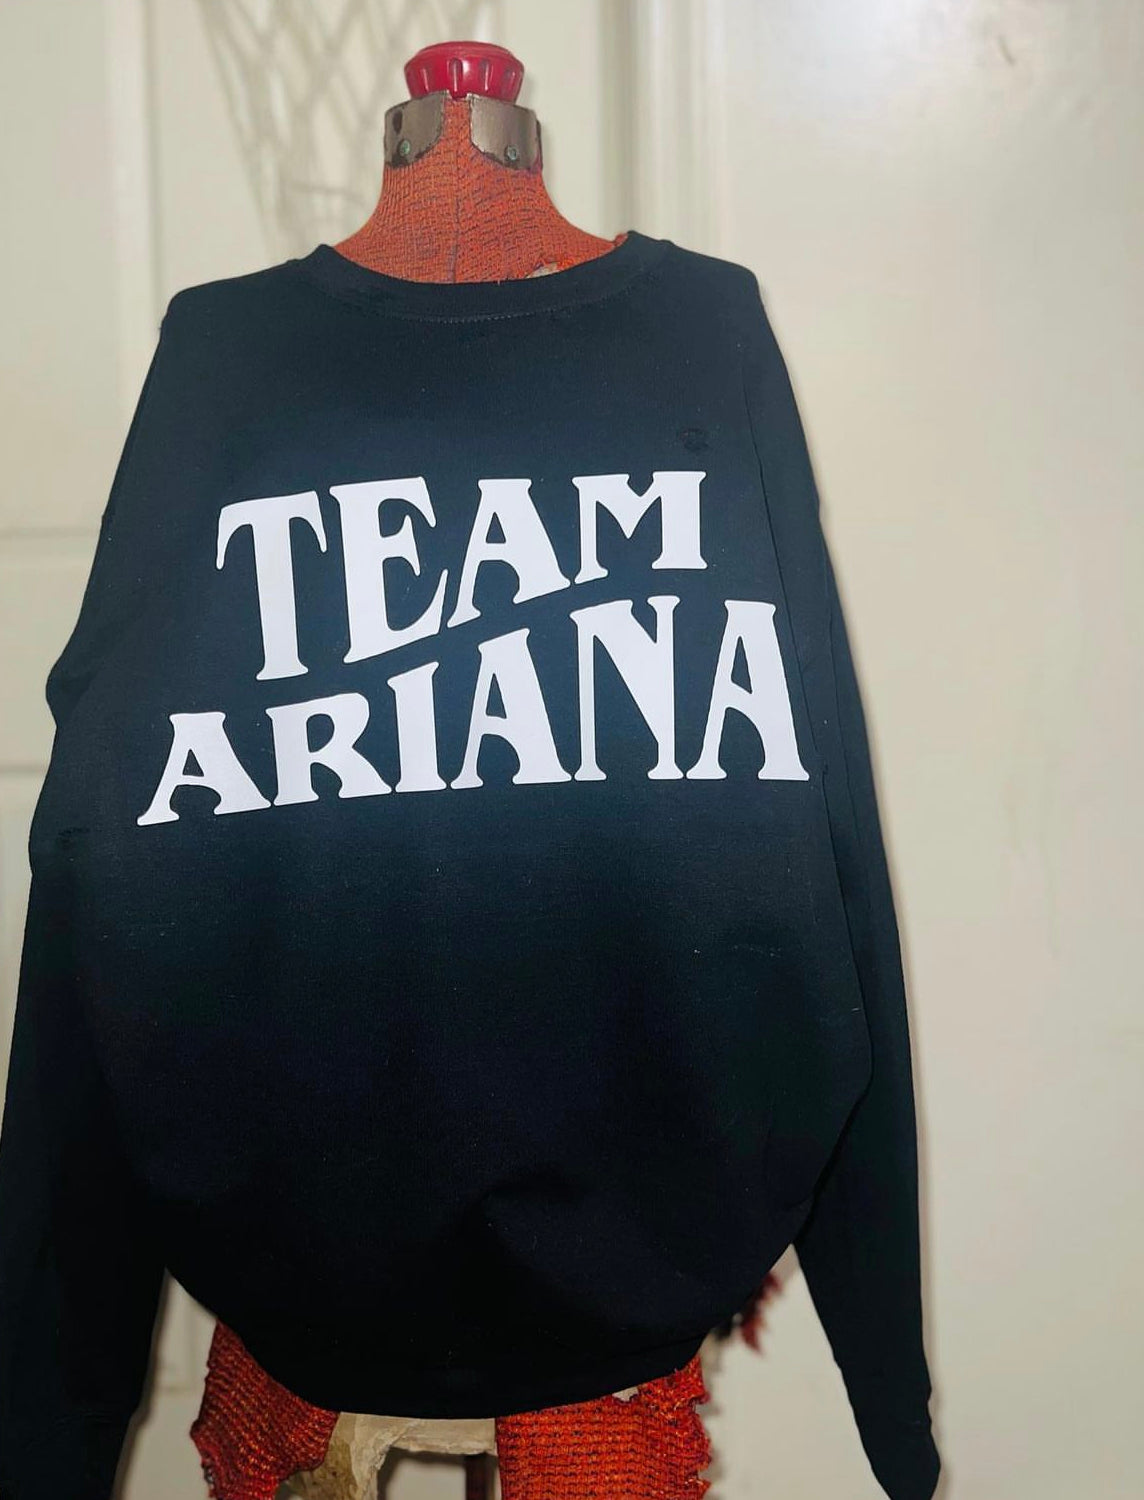 Team Ariana Distressed Sweatshirts and Tees